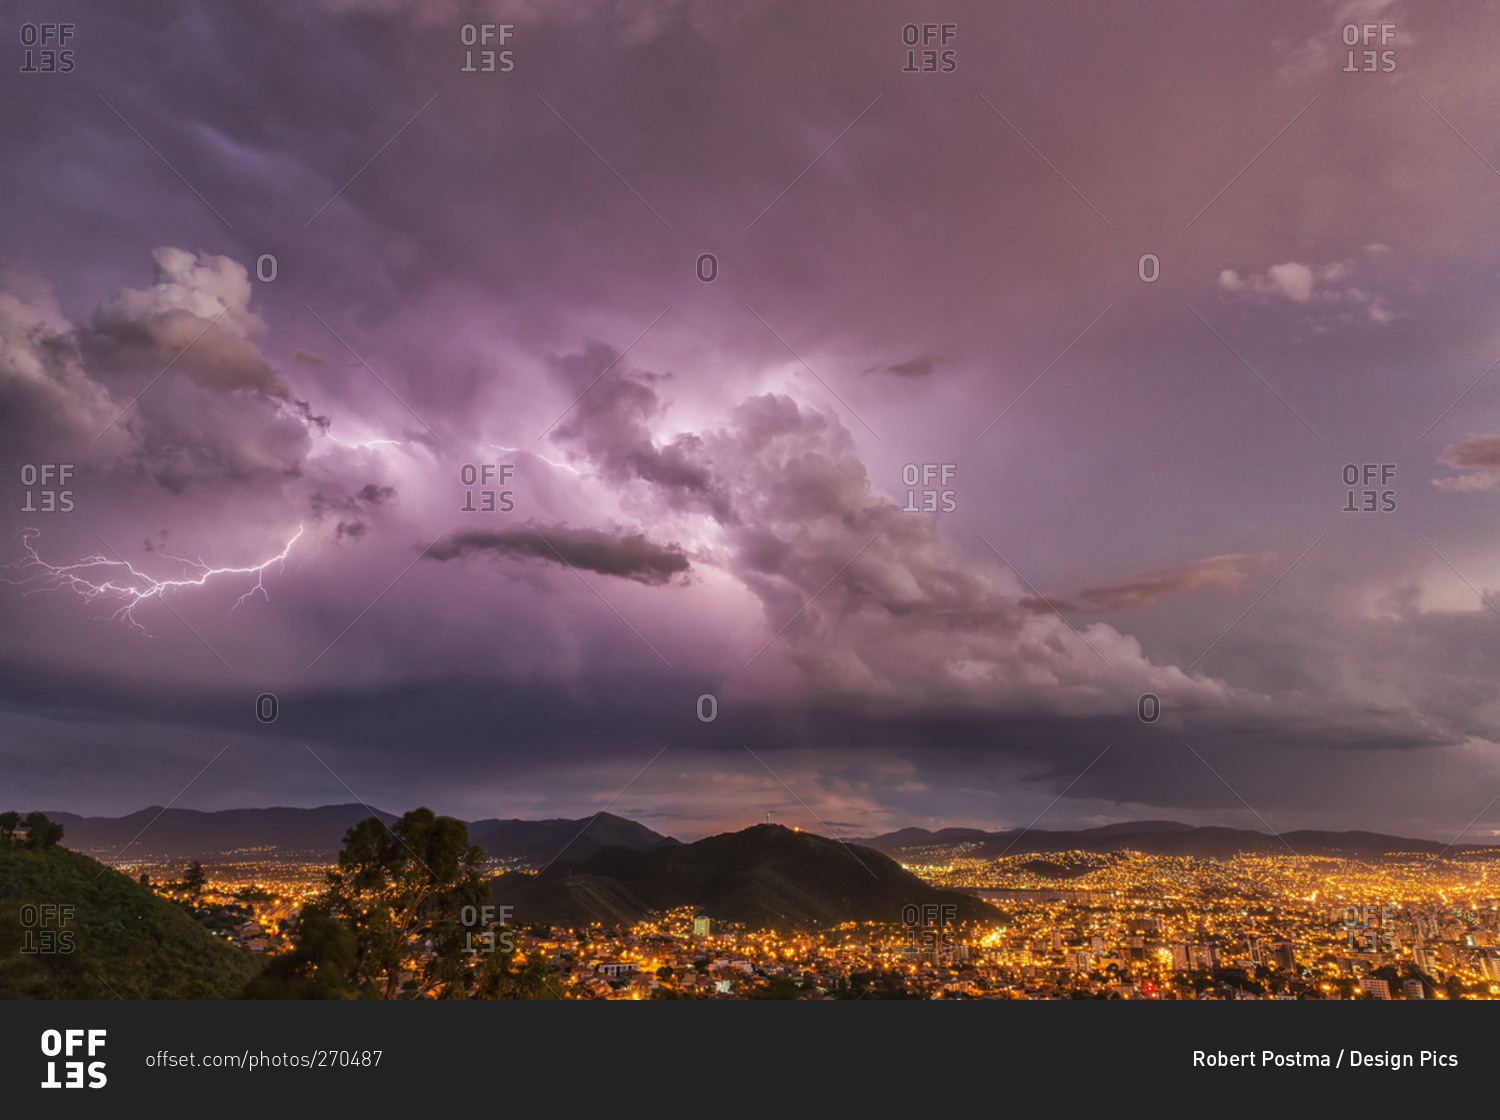 Lightning in the night skies above the city of Cochabamba, Cochabamba, Bolivia